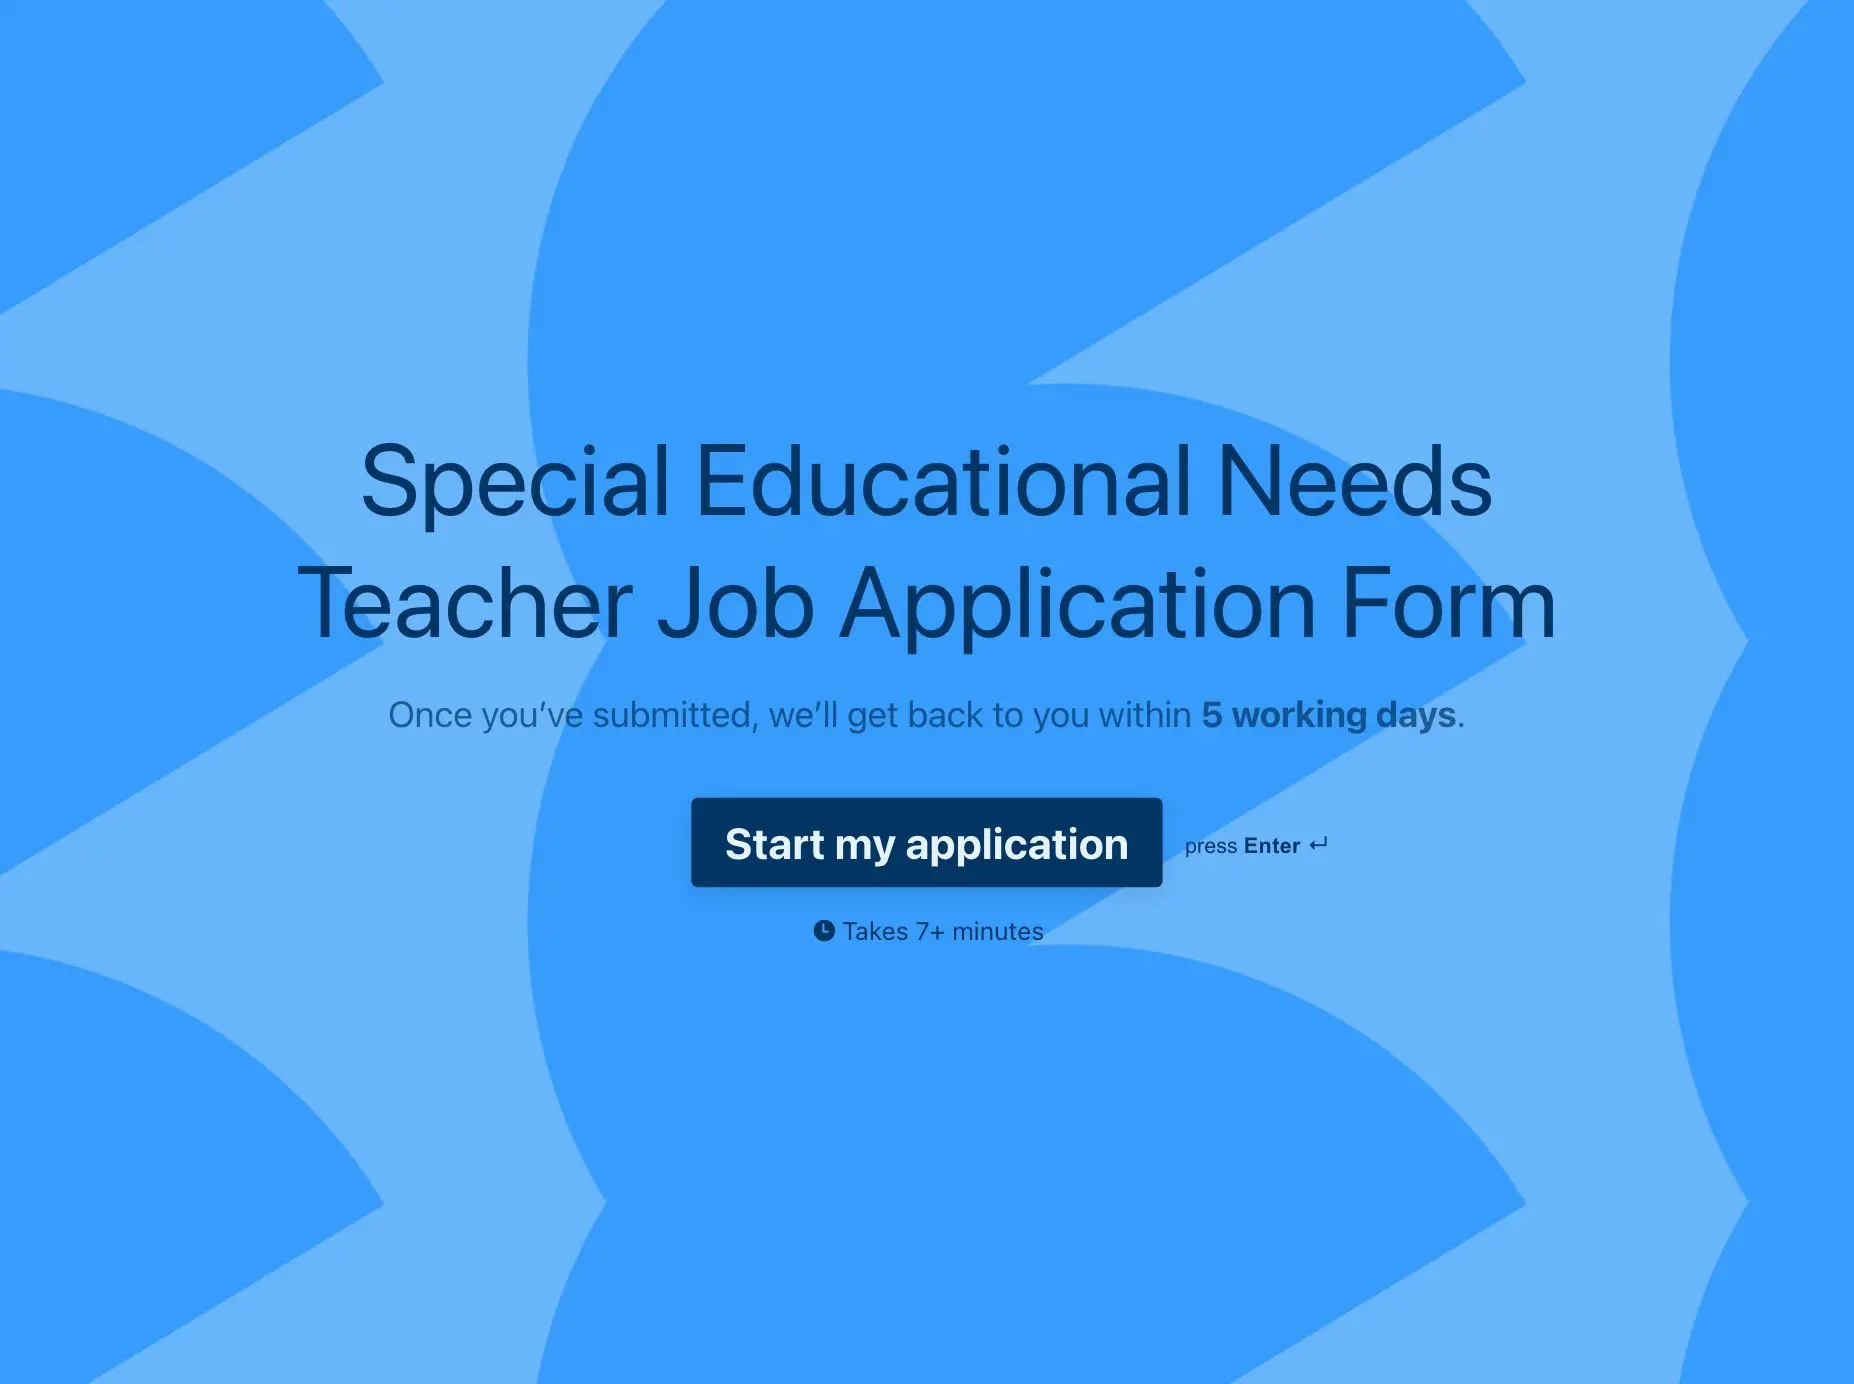 Special Educational Needs Teacher Job Application Form Template Hero